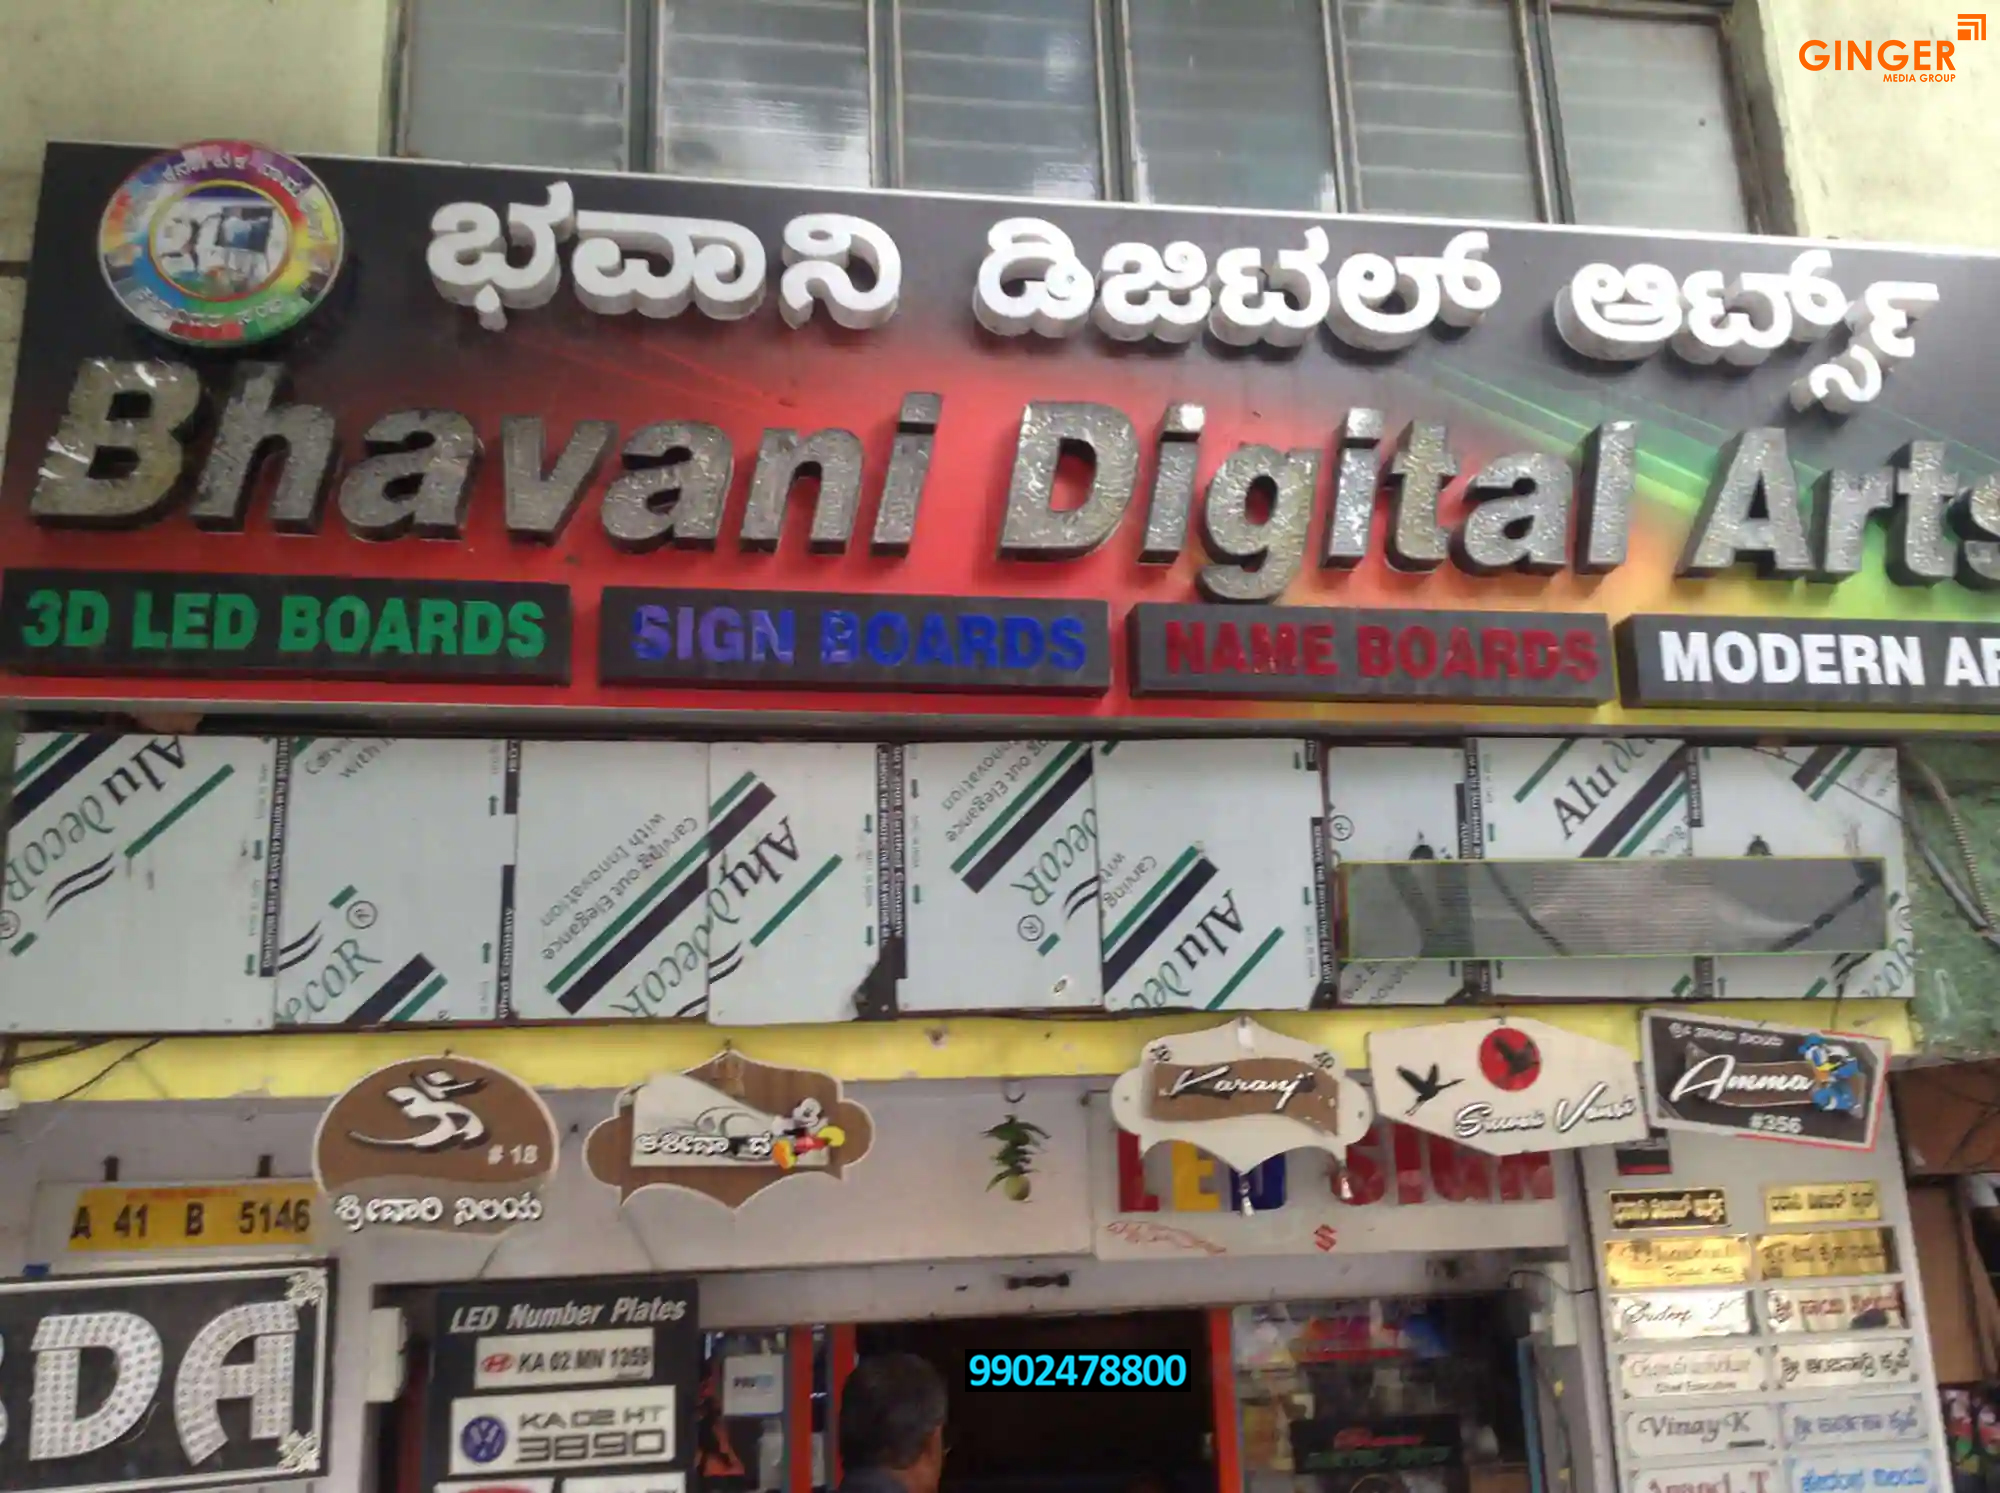 Shop Name Board in Bangalore for Bhavani Digital Arts